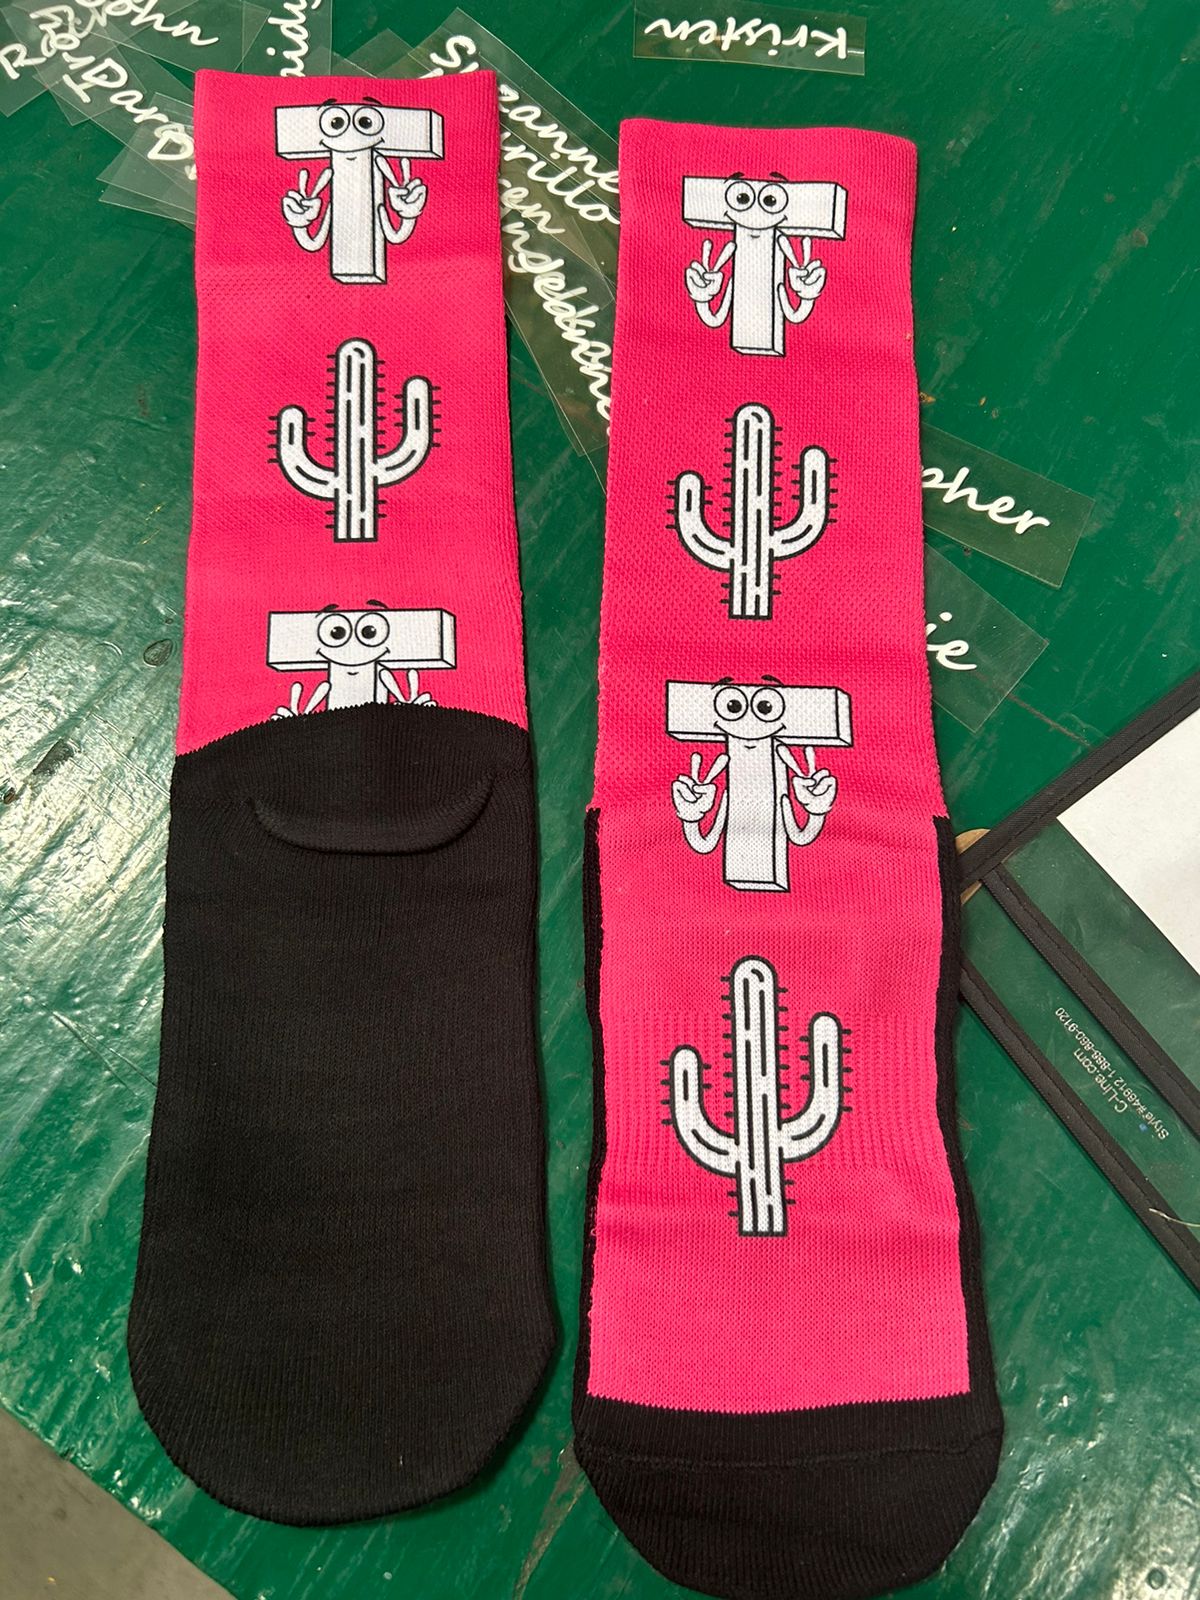 Sublimated Crew Socks customizable with logo